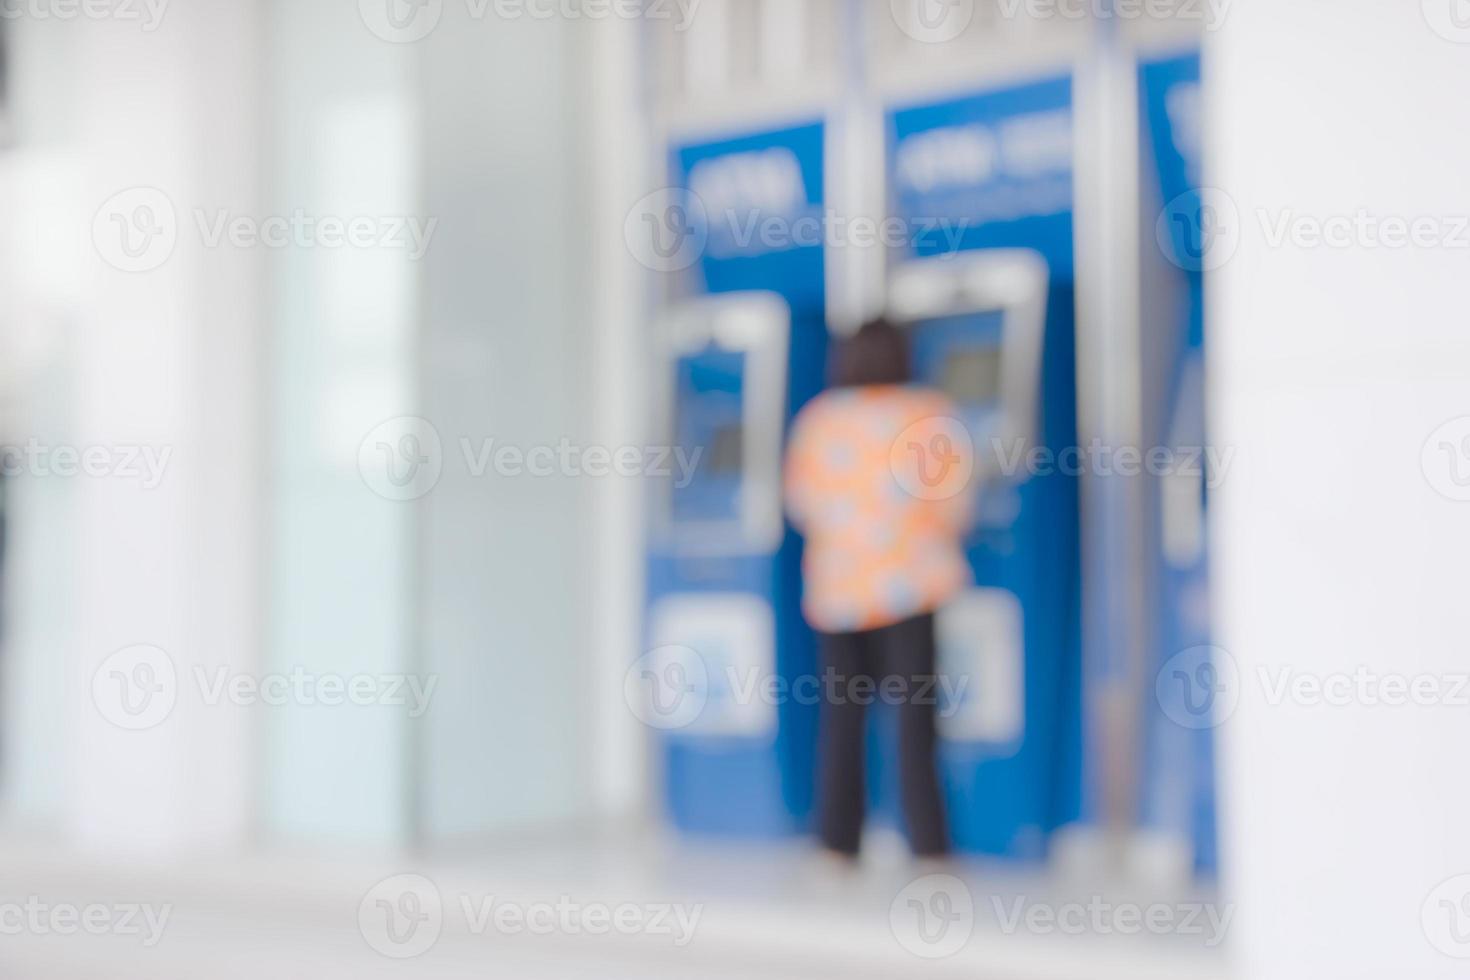 automatisch teller machine vervagen achtergrond van illustratie, samenvatting wazig, geldautomaat foto